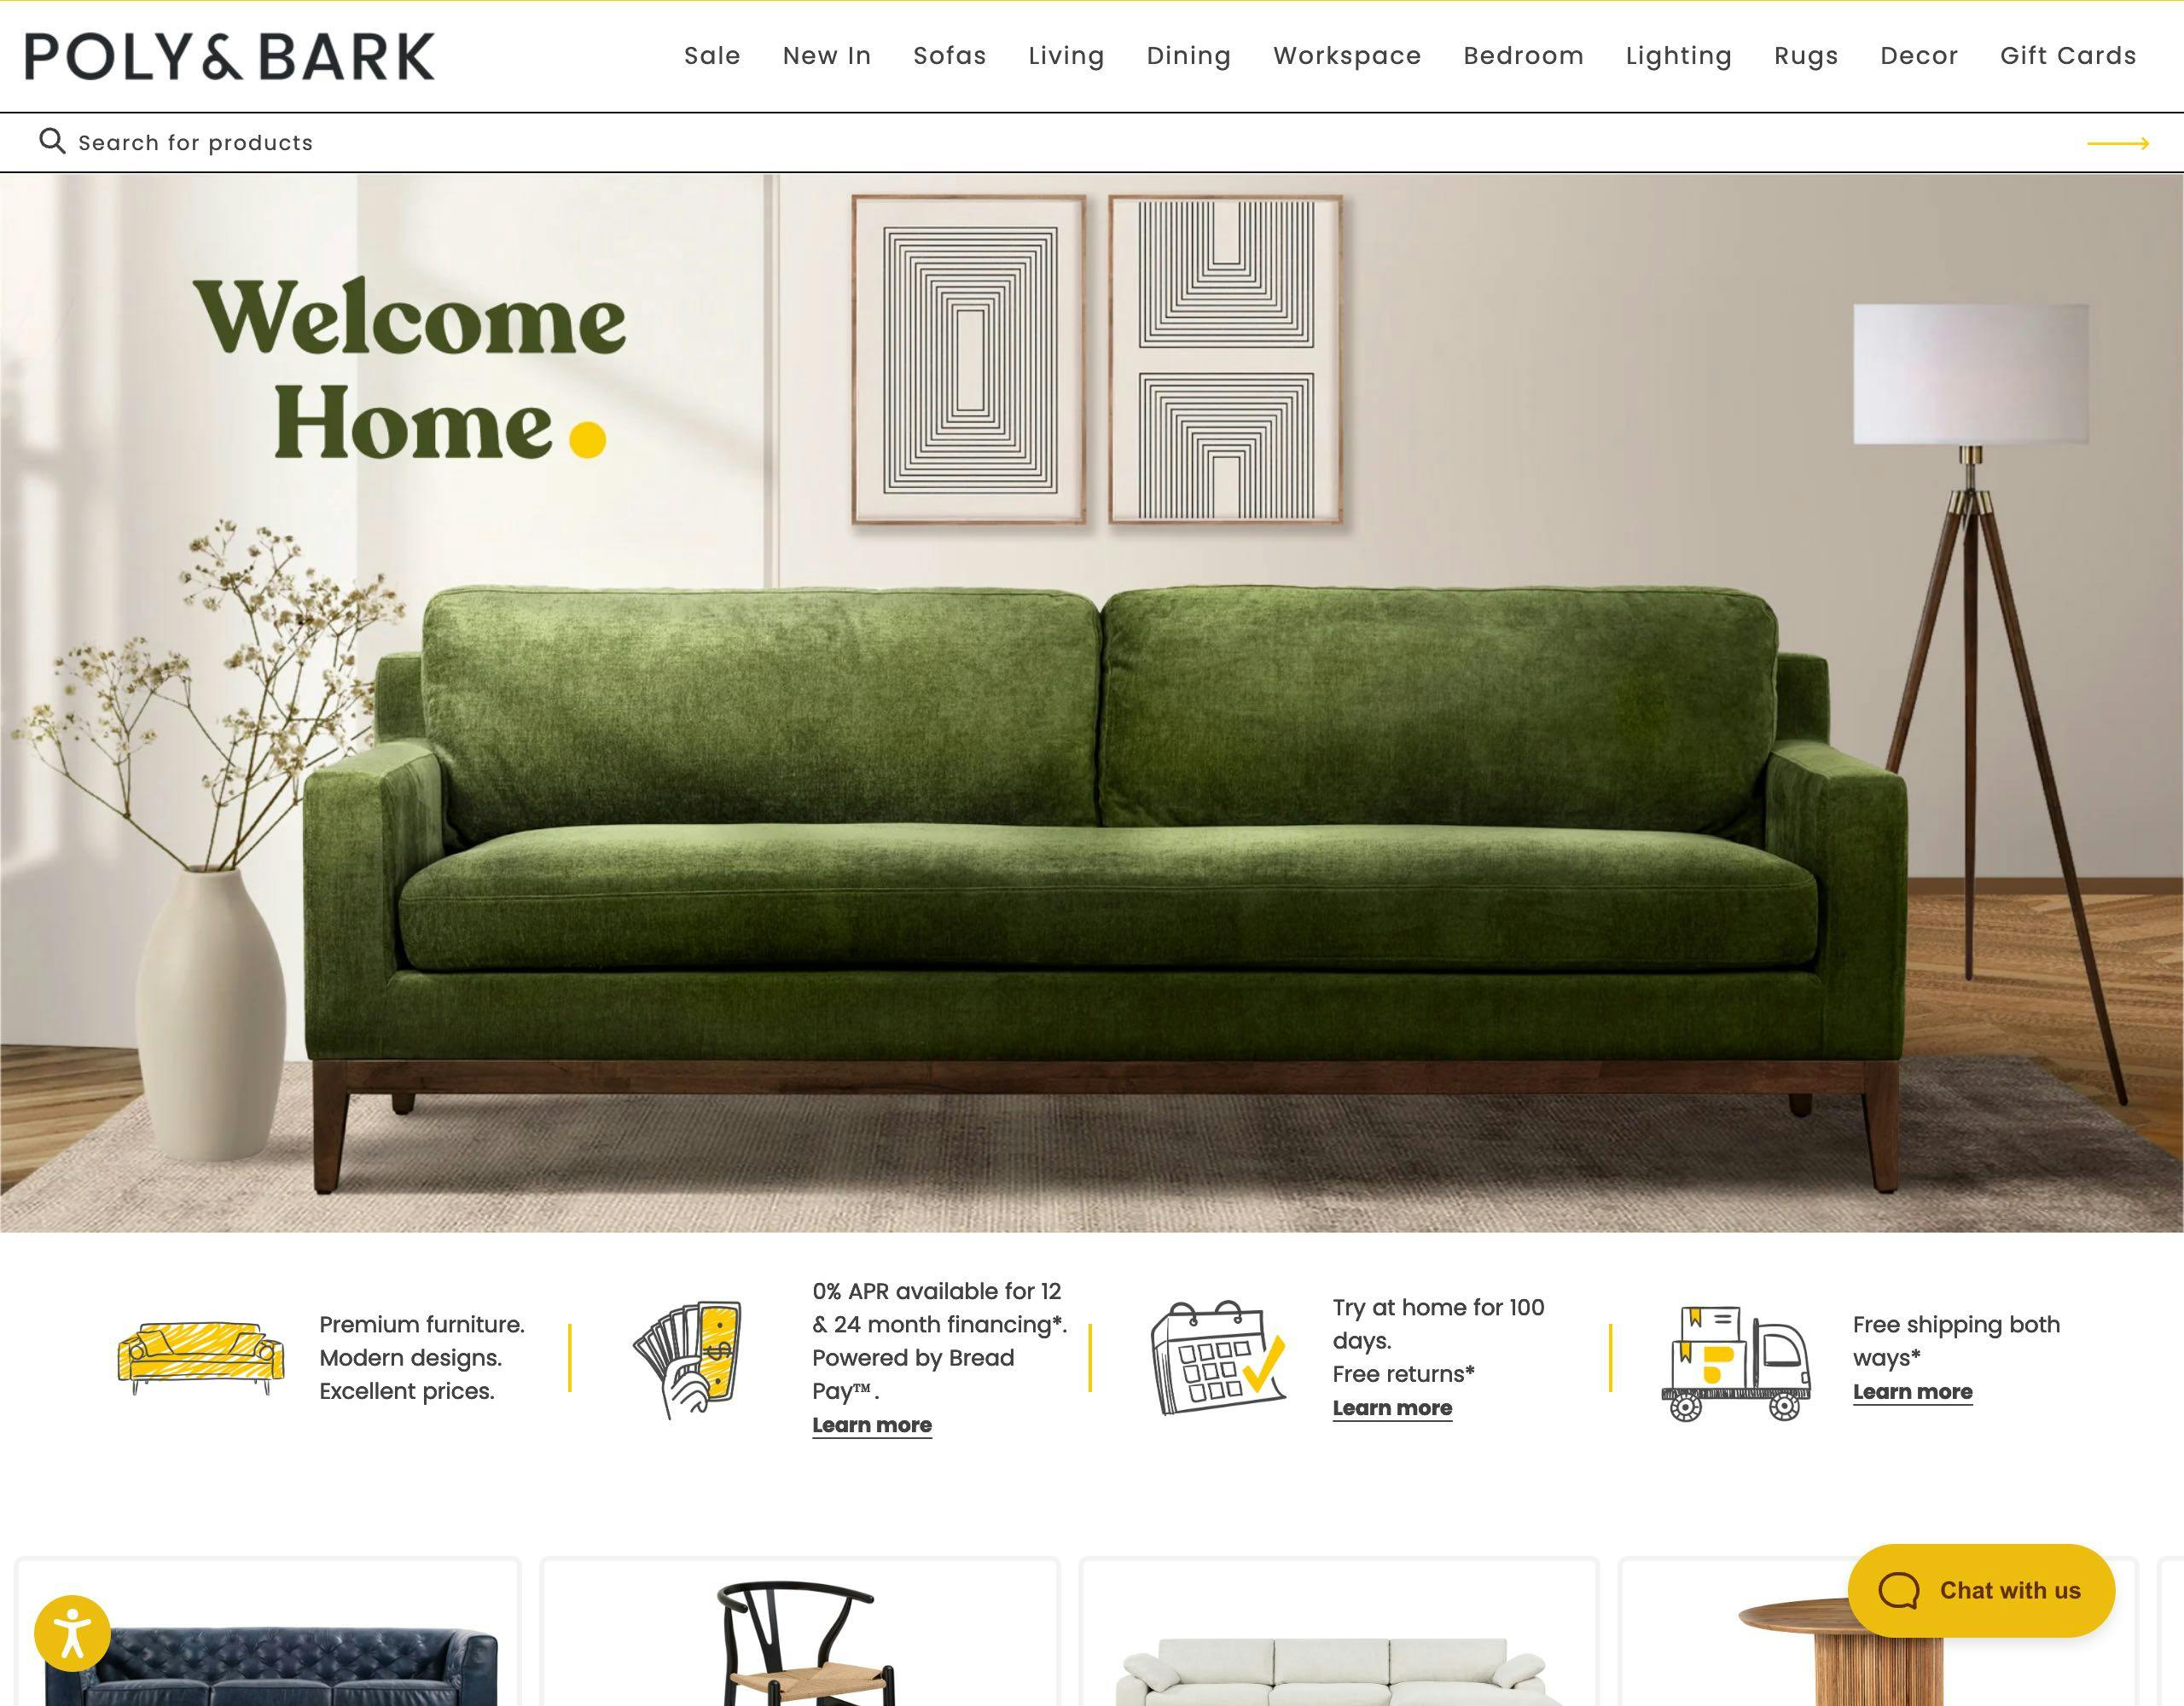 Poly & Bark website